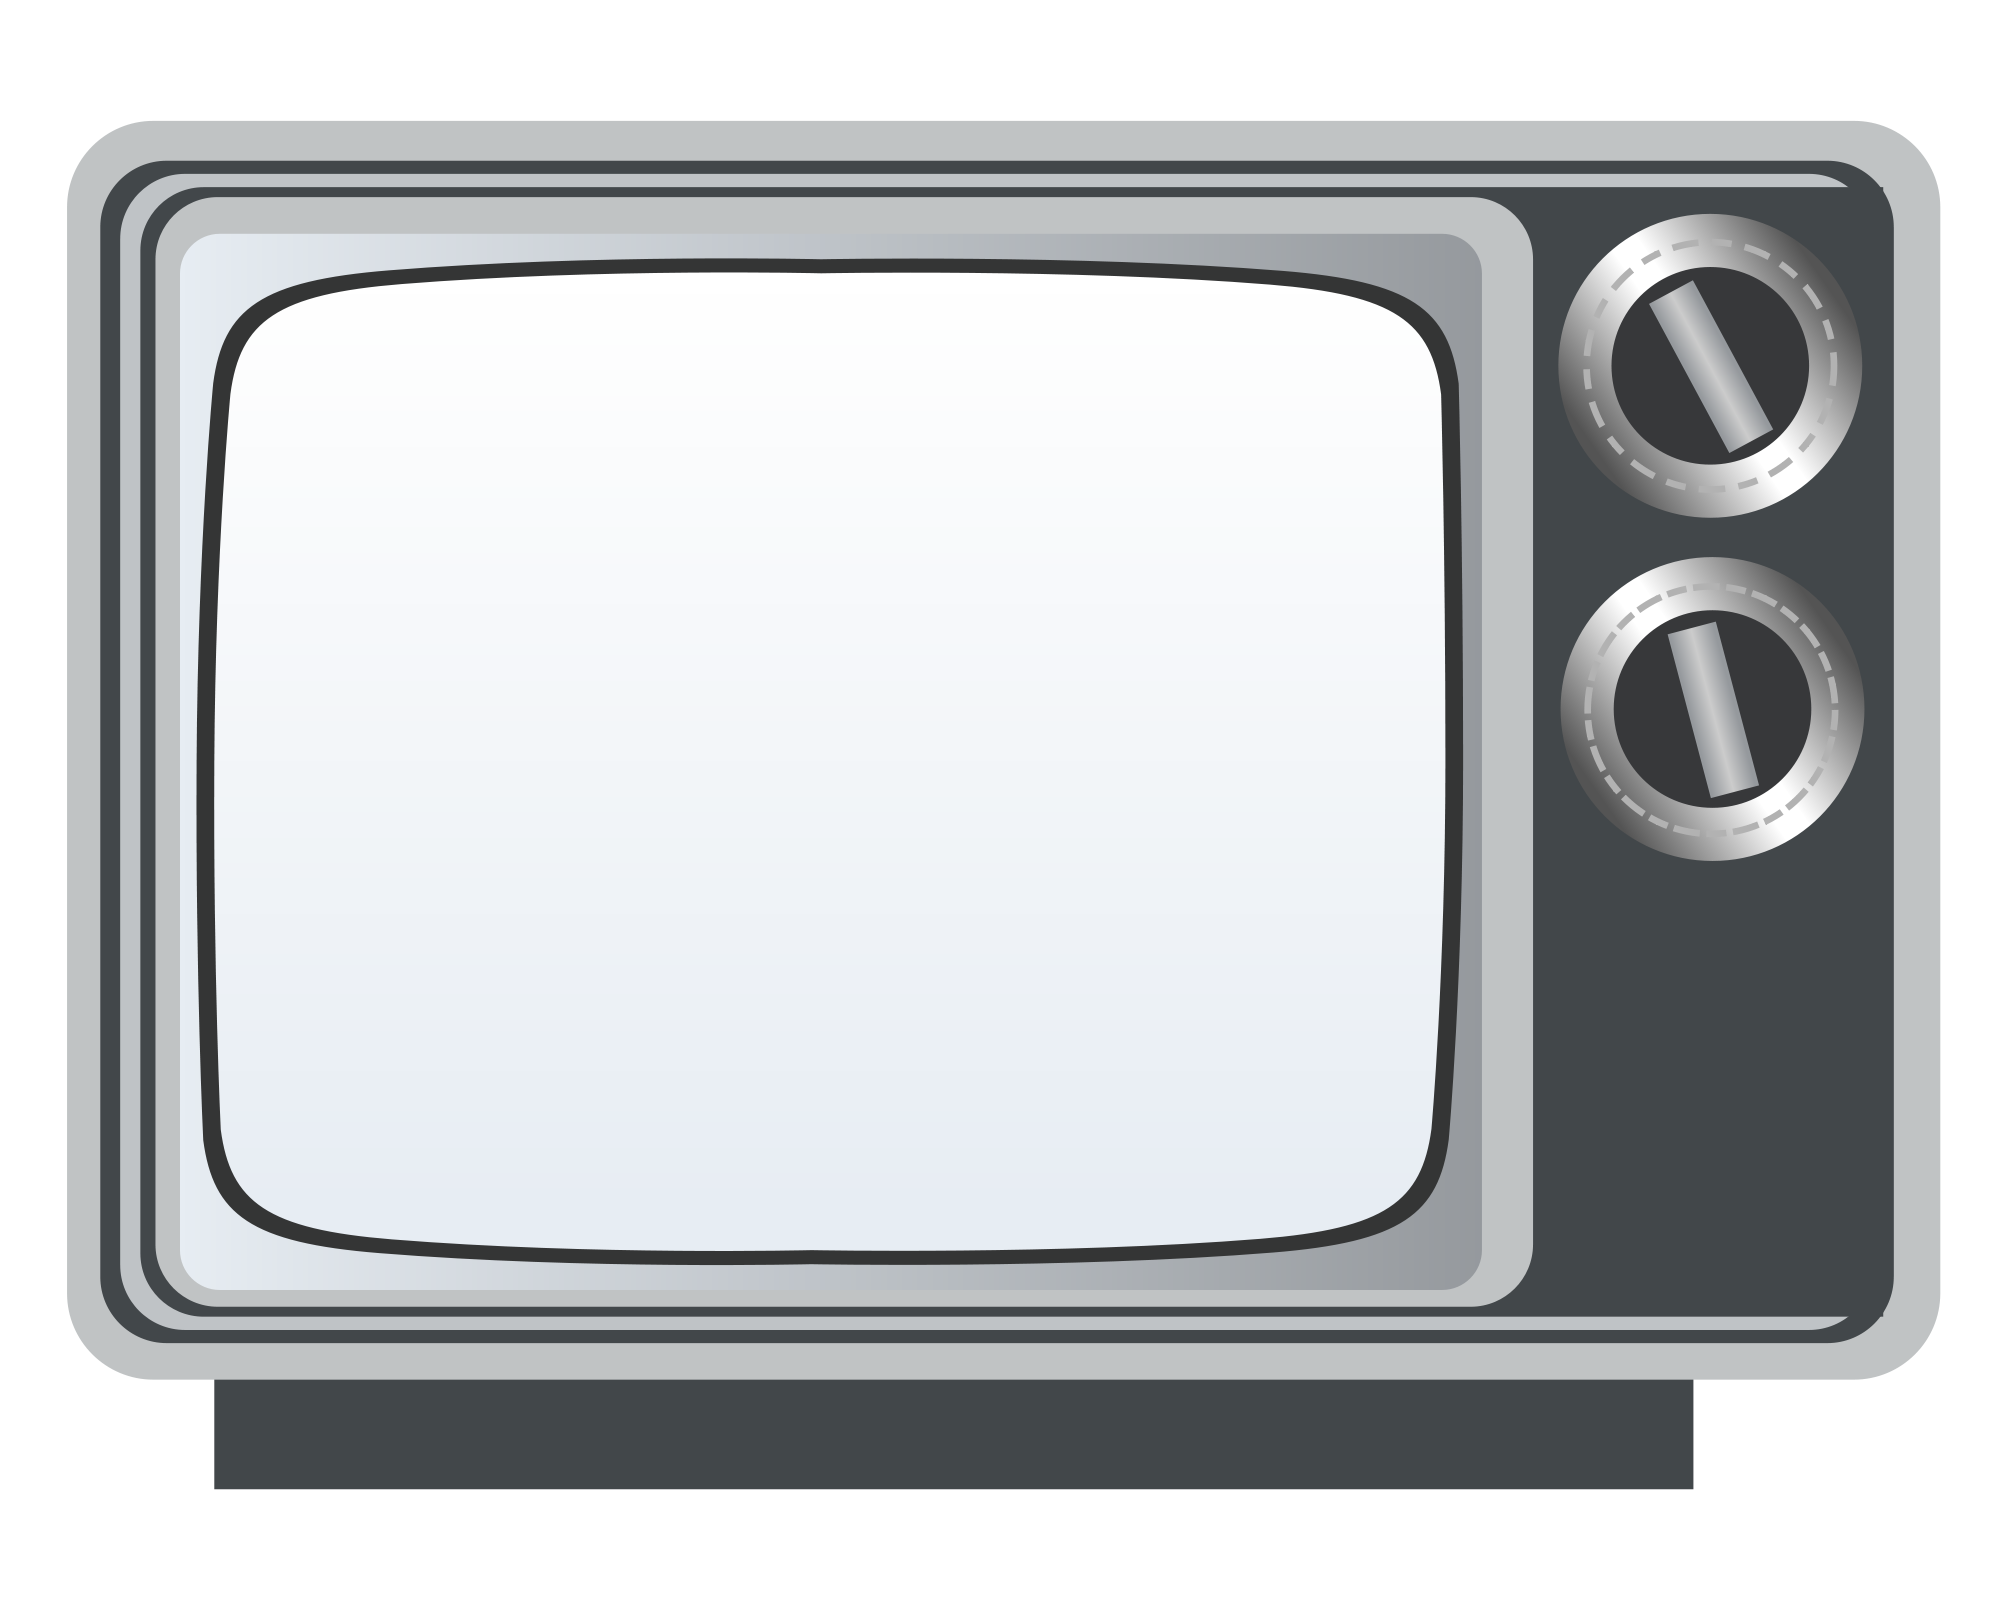 Tv, Vintage, Television, Tech